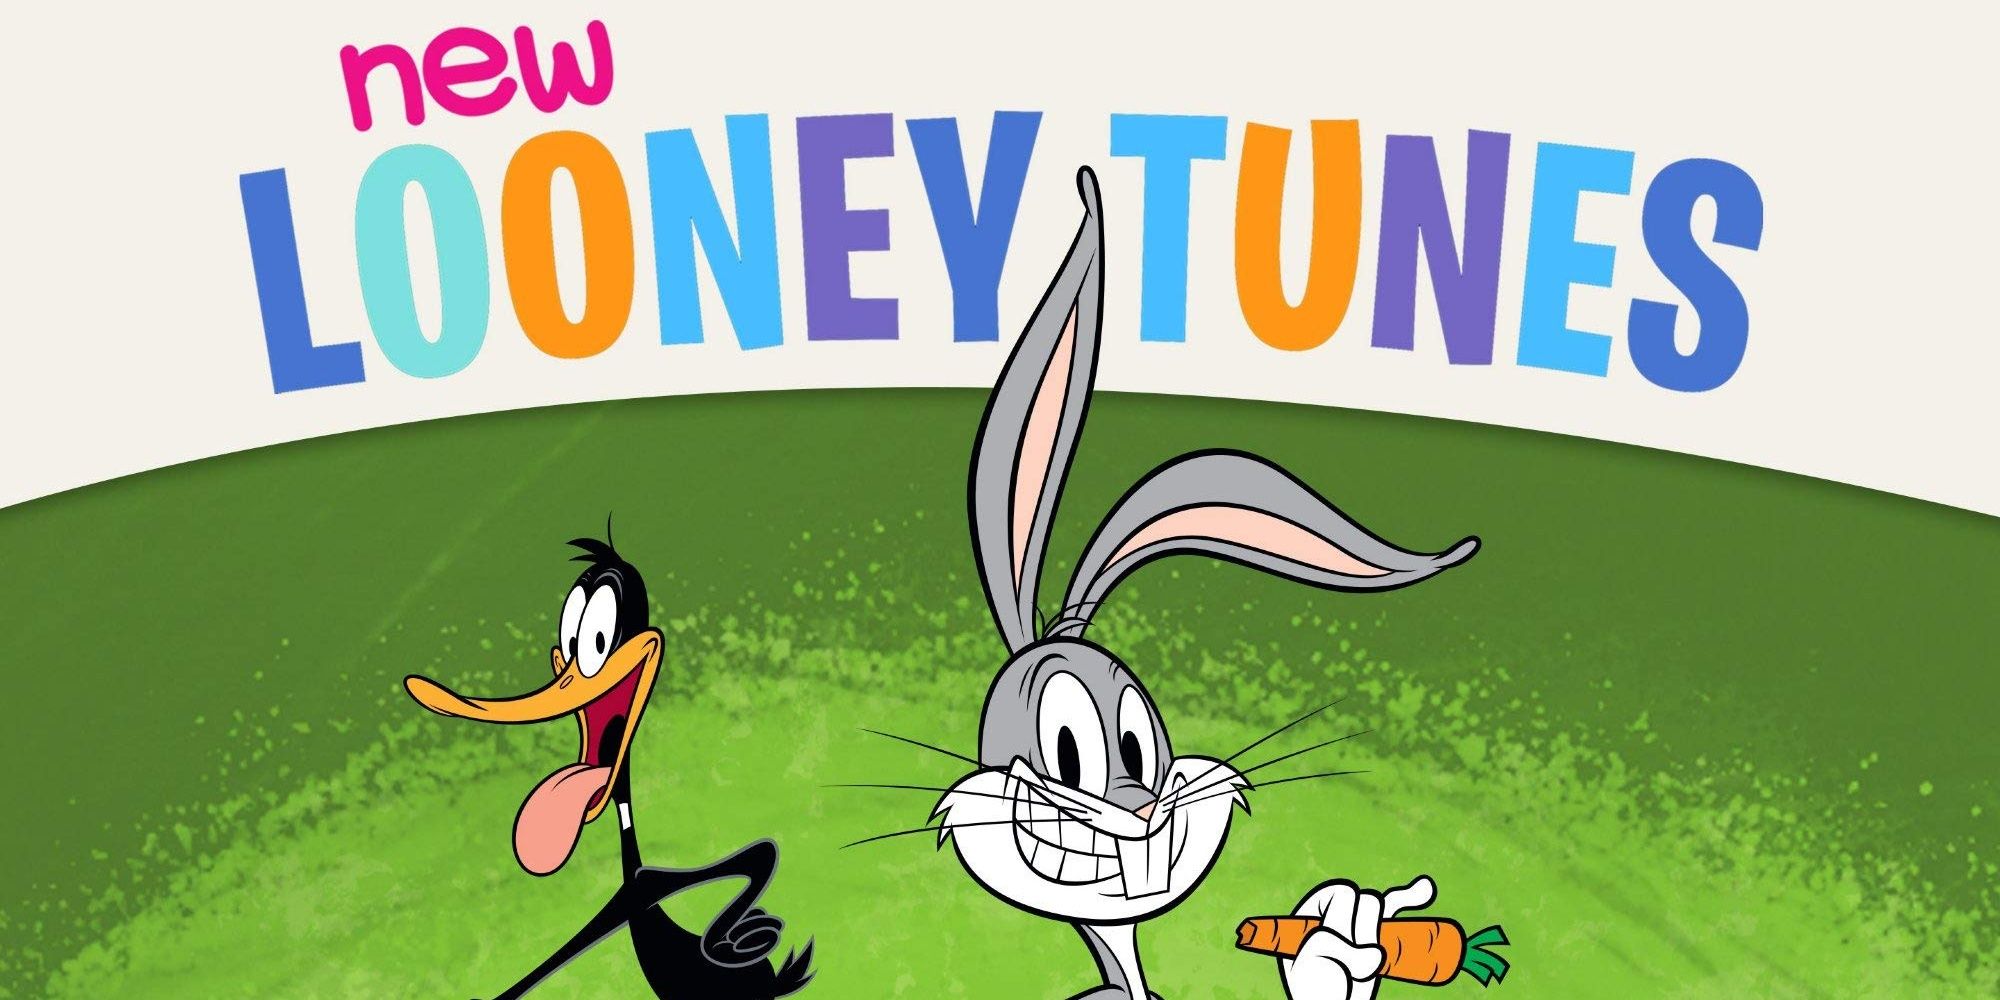 New Looney Tunes Poster